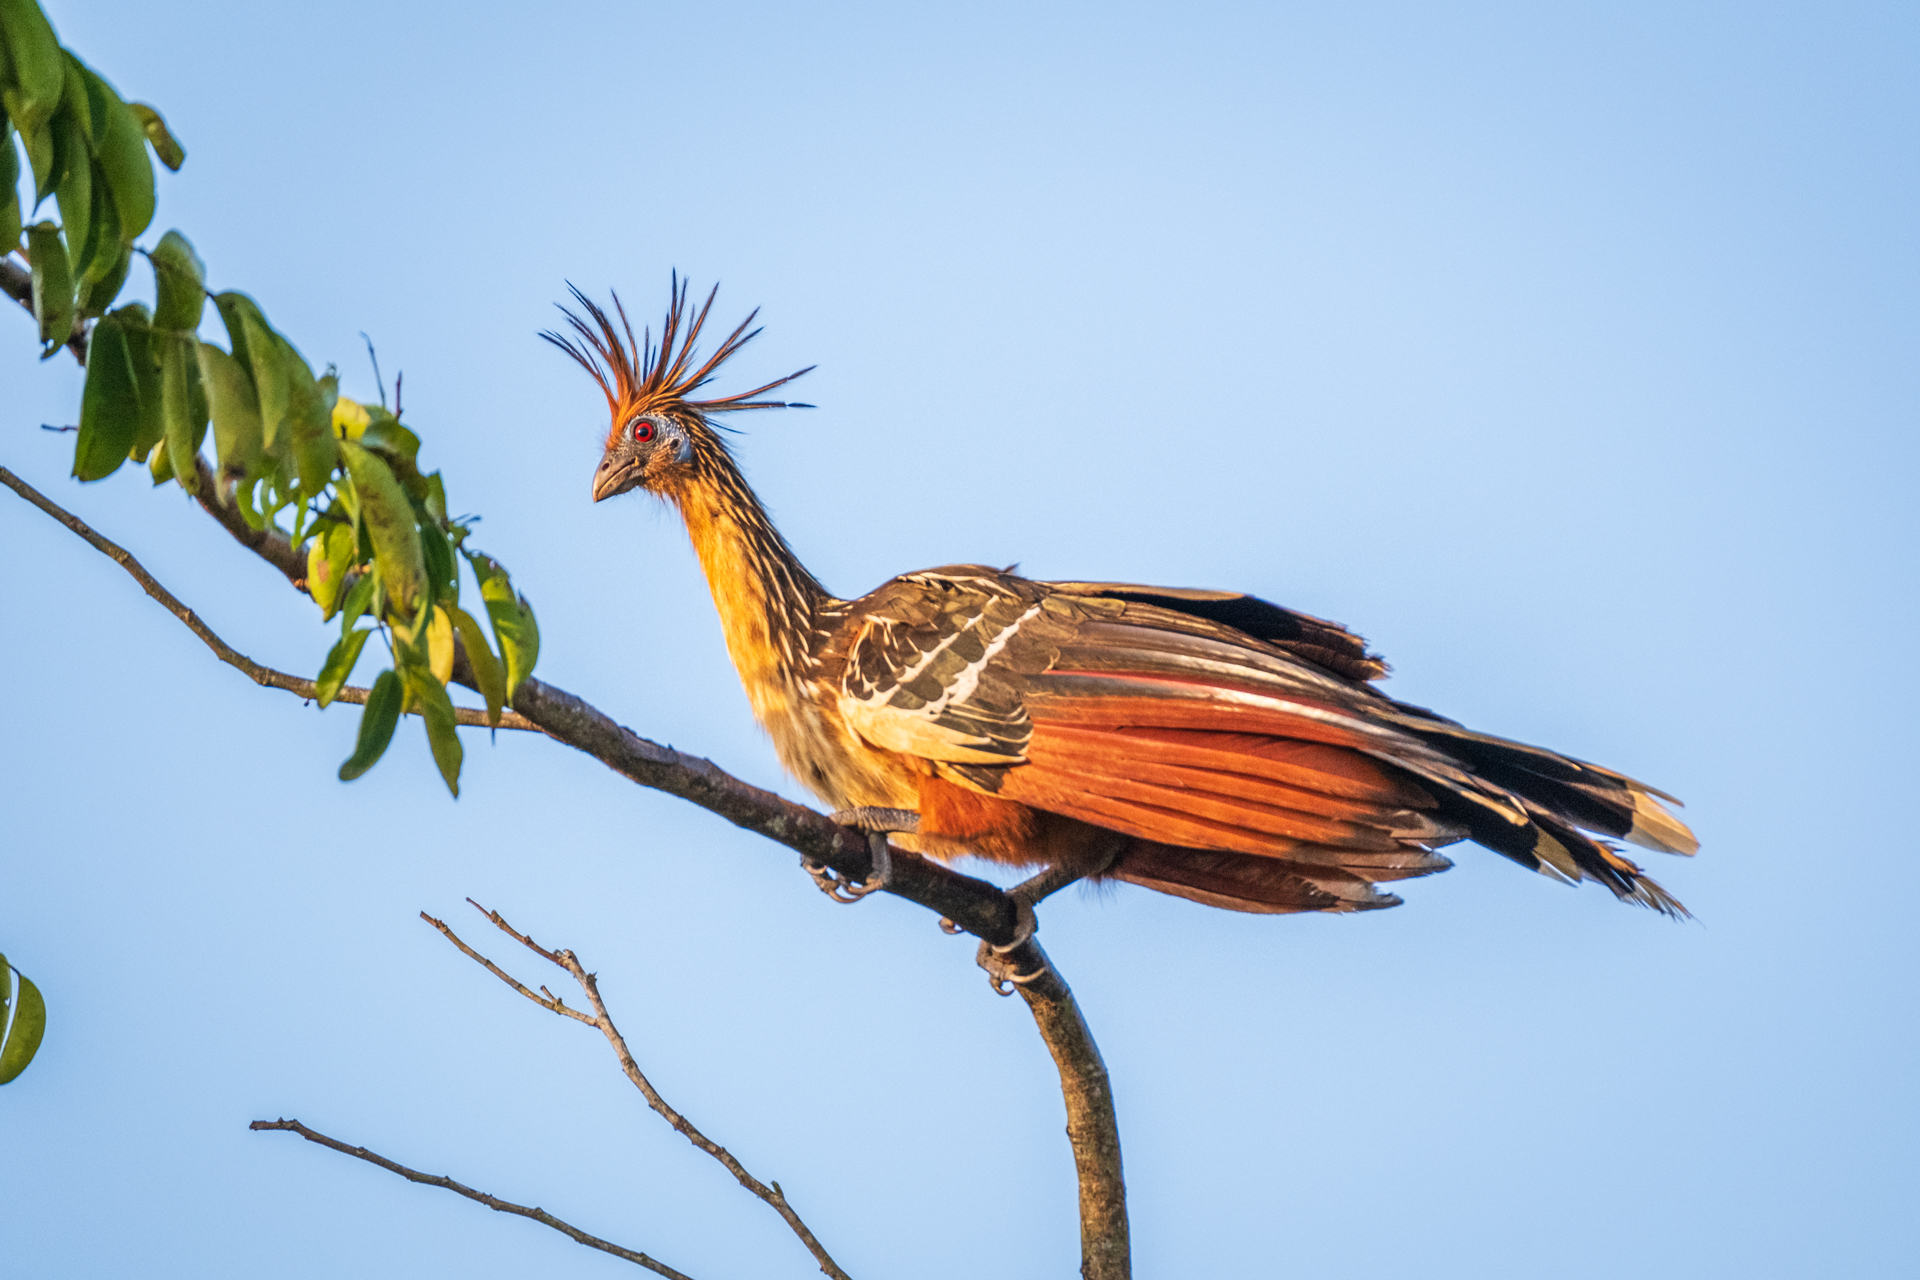 A hoatzin, the national bird of Guyana.